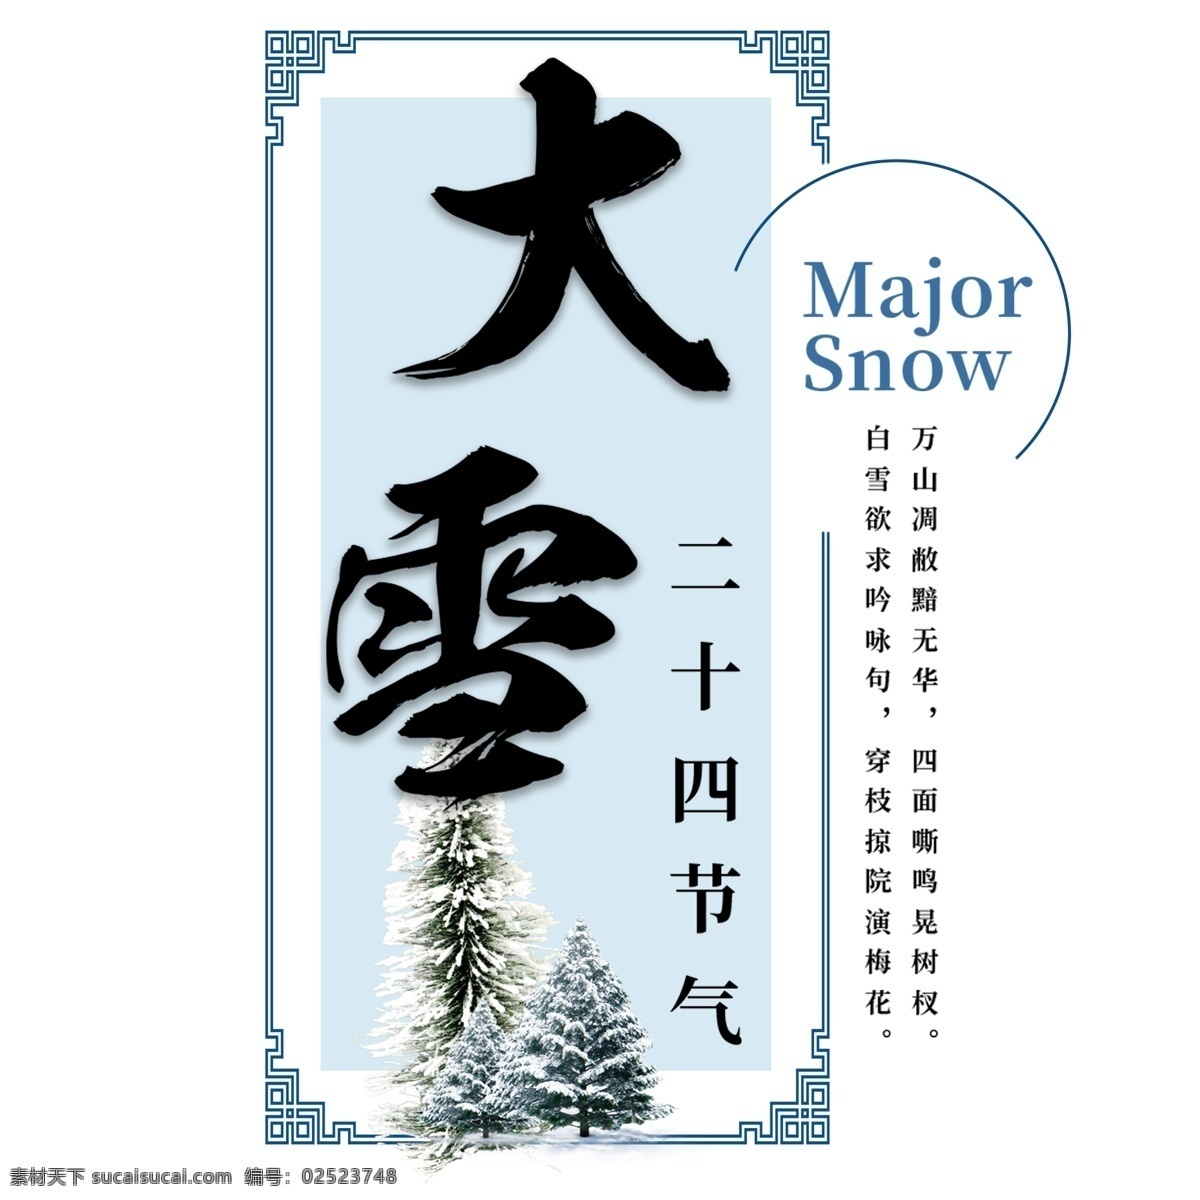 v 大雪 二 十 四 传统 节气 冬天 意境 下雪 寒冷 雪花 结冰 积雪 古风 二十四